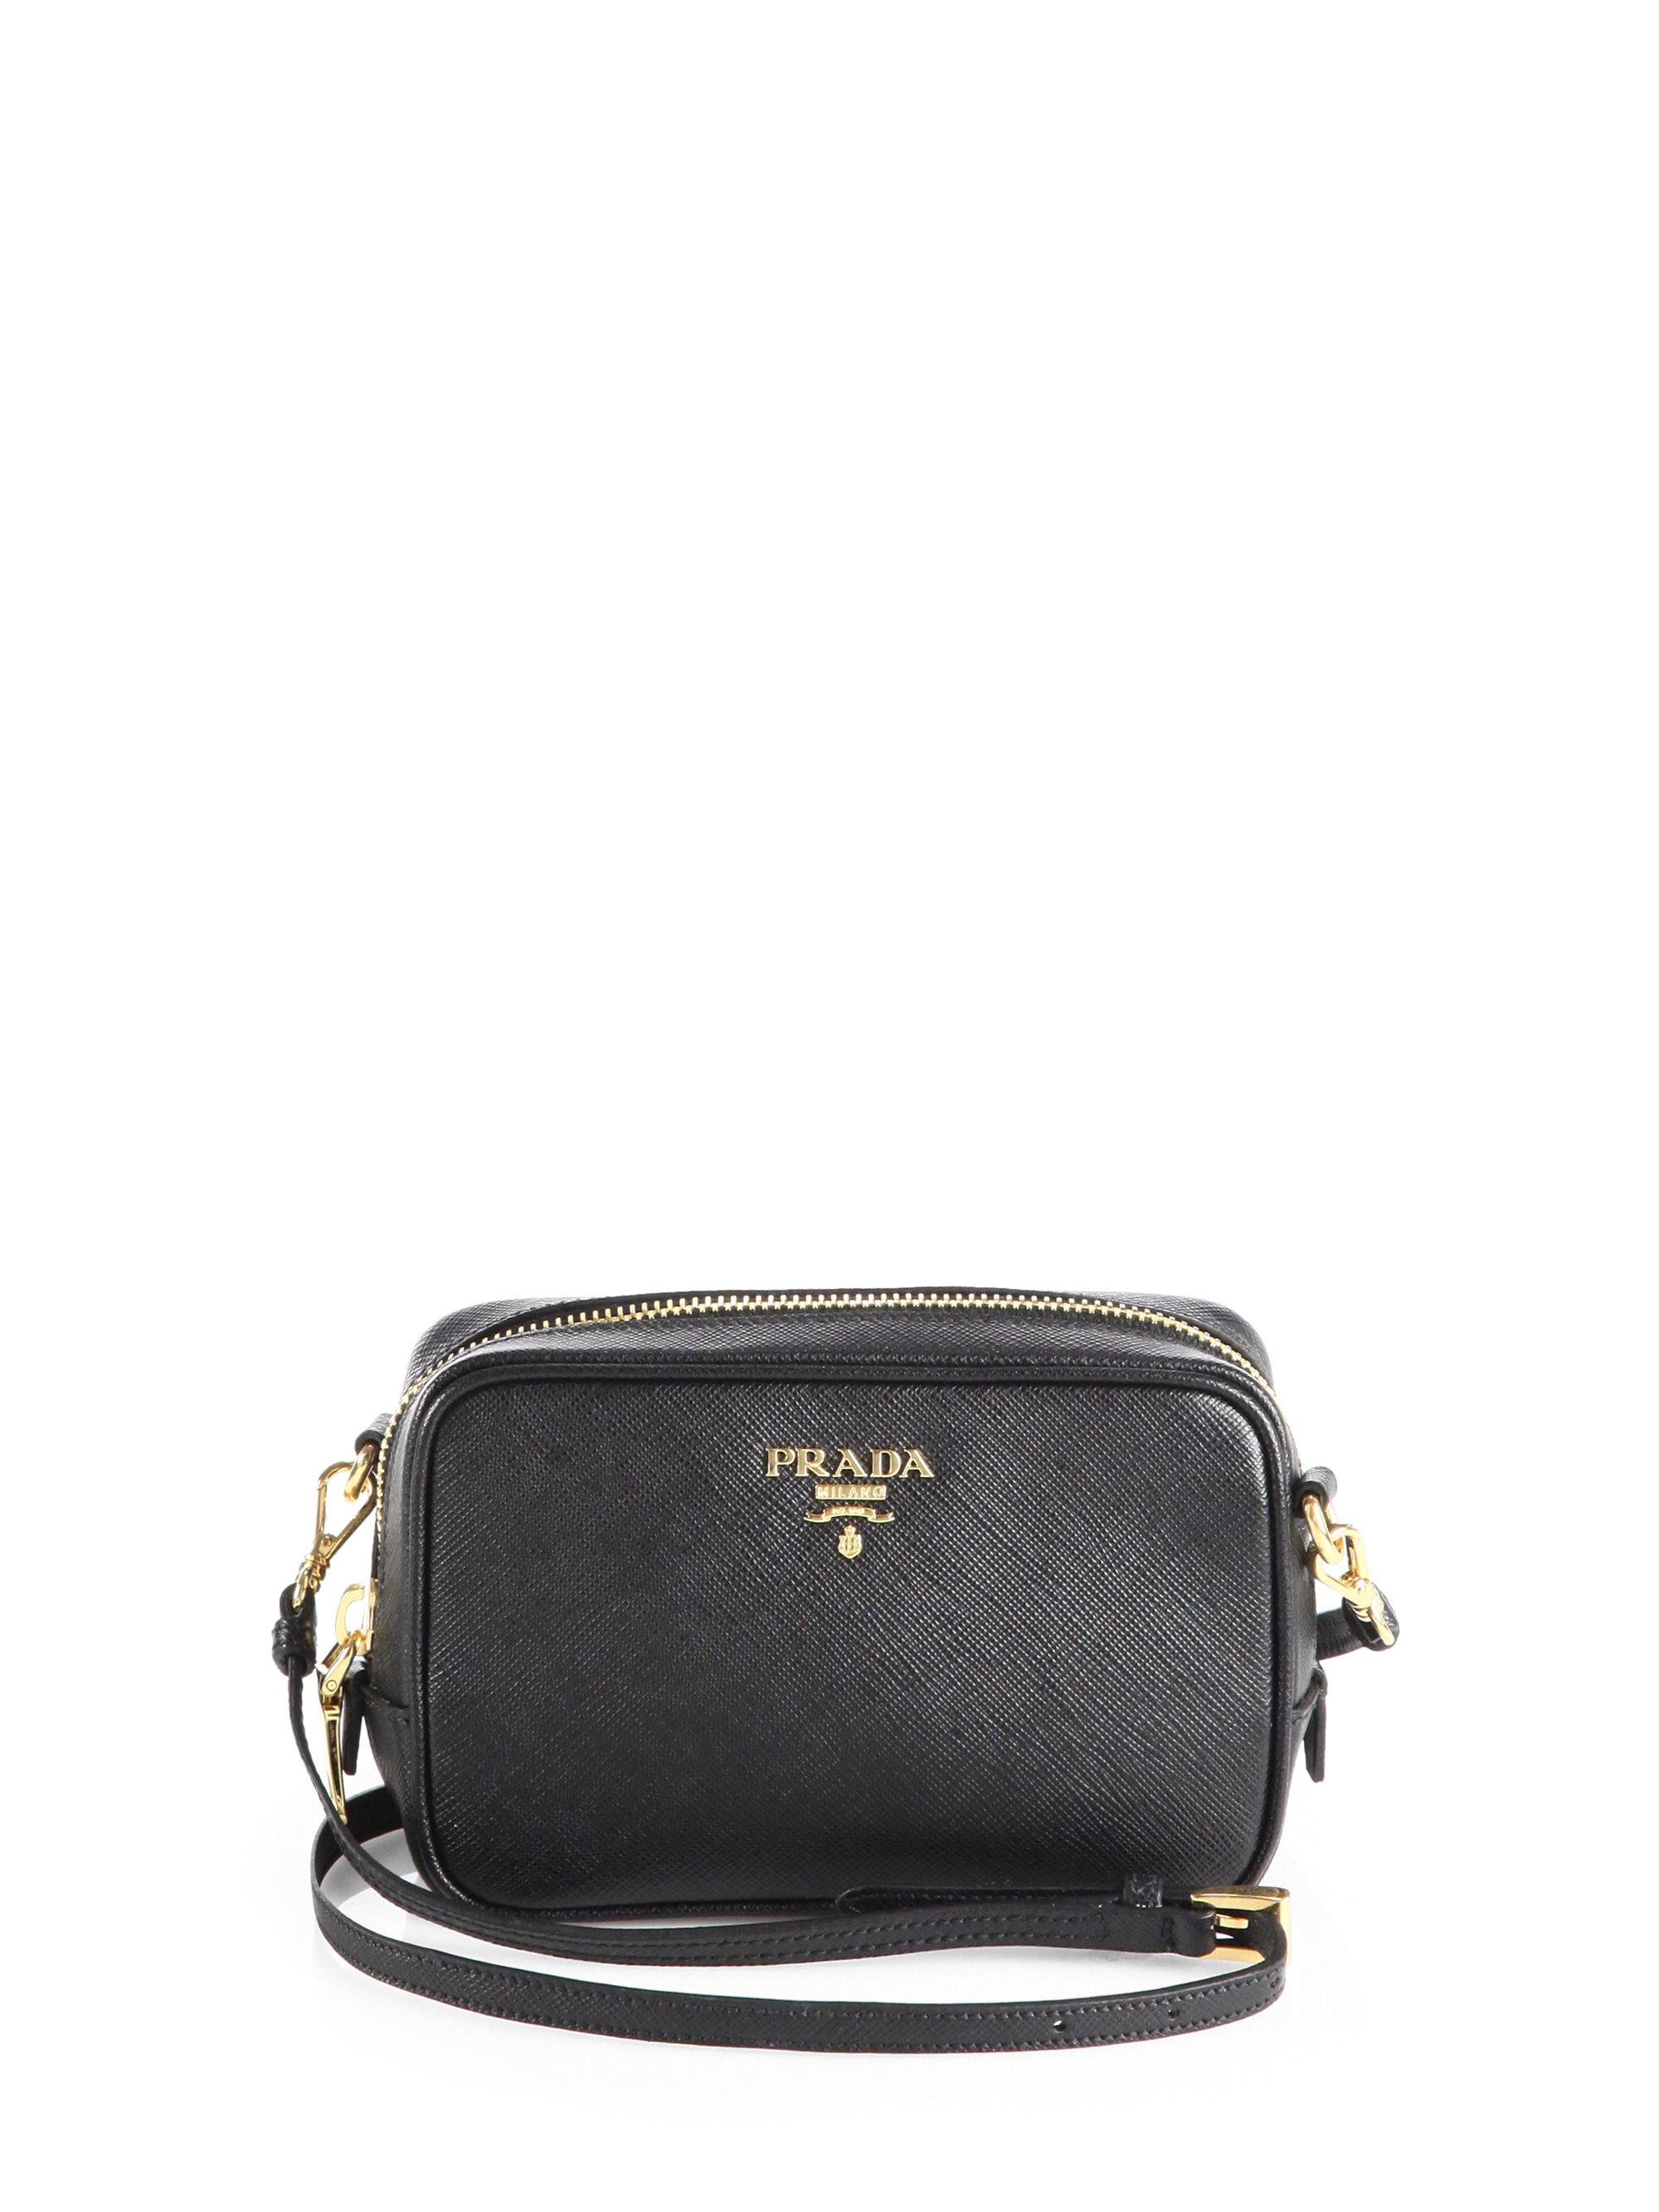 Prada Saffiano Leather Camera Bag in Black | Lyst